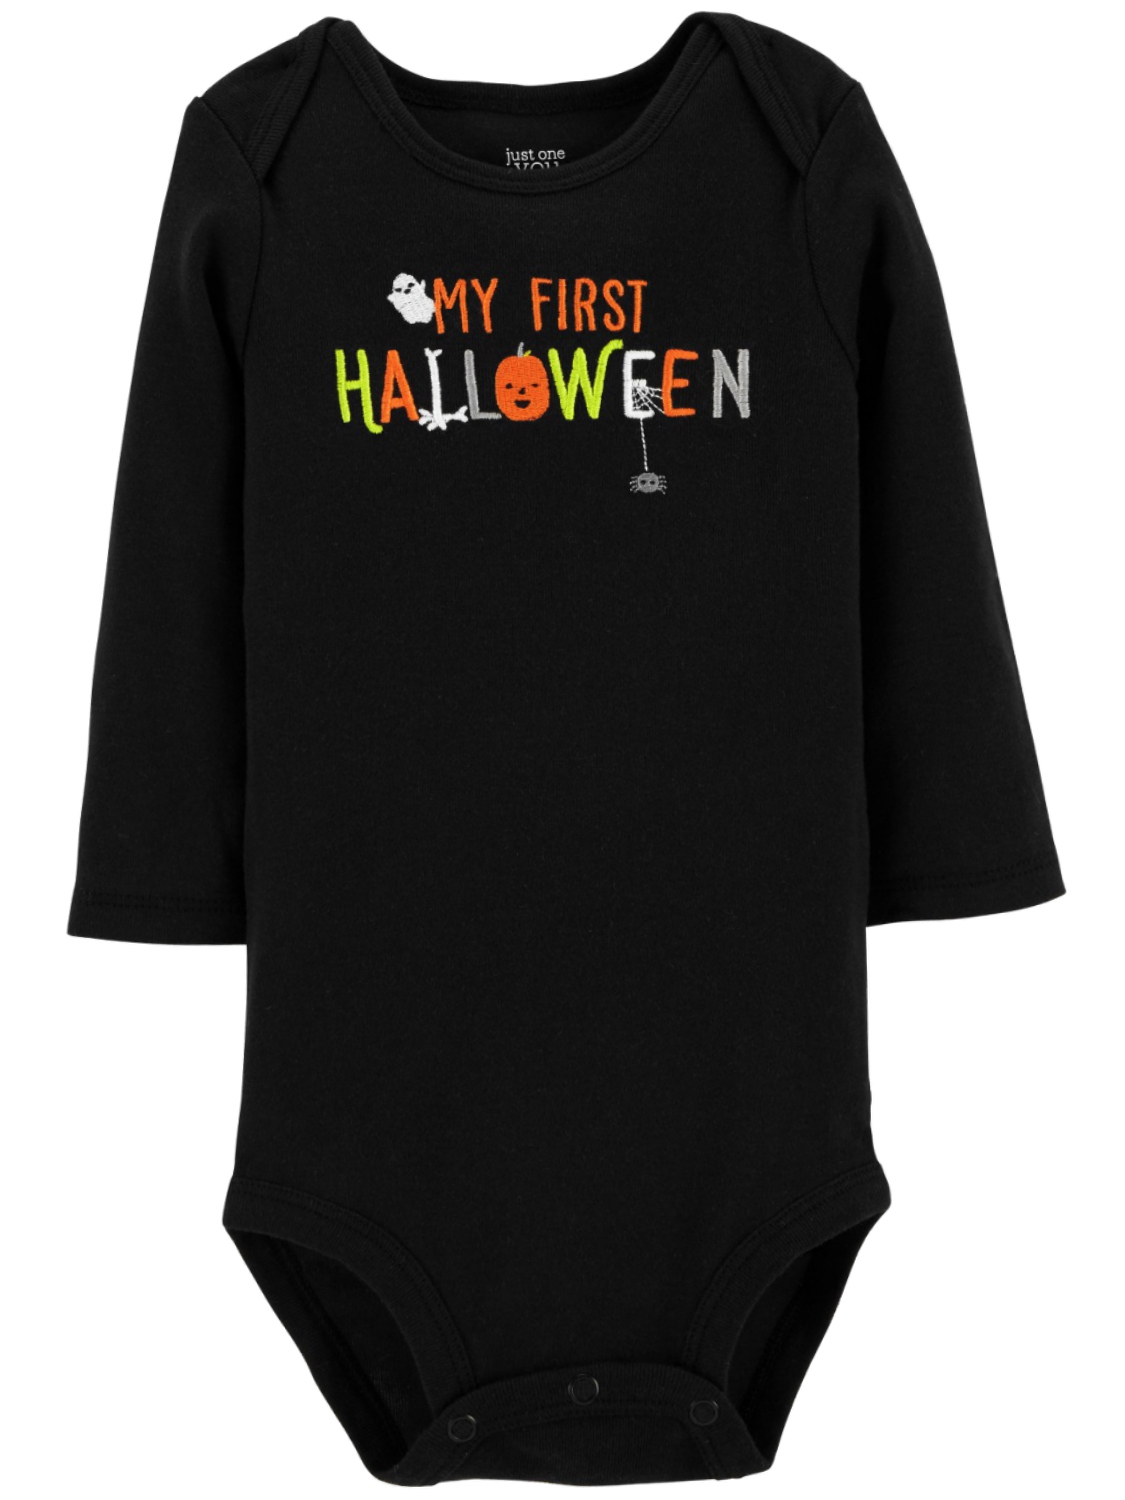 Carter's Carters Infant Boy Black My First Halloween Bodysuit Ghost Creeper Shirt